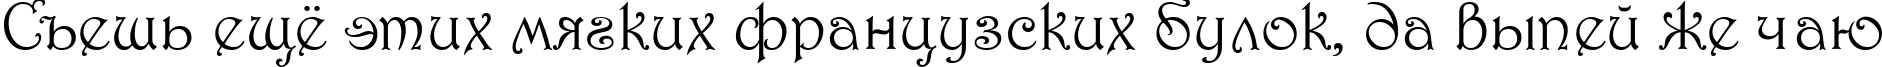 Пример написания шрифтом 1 Harrington M текста на русском